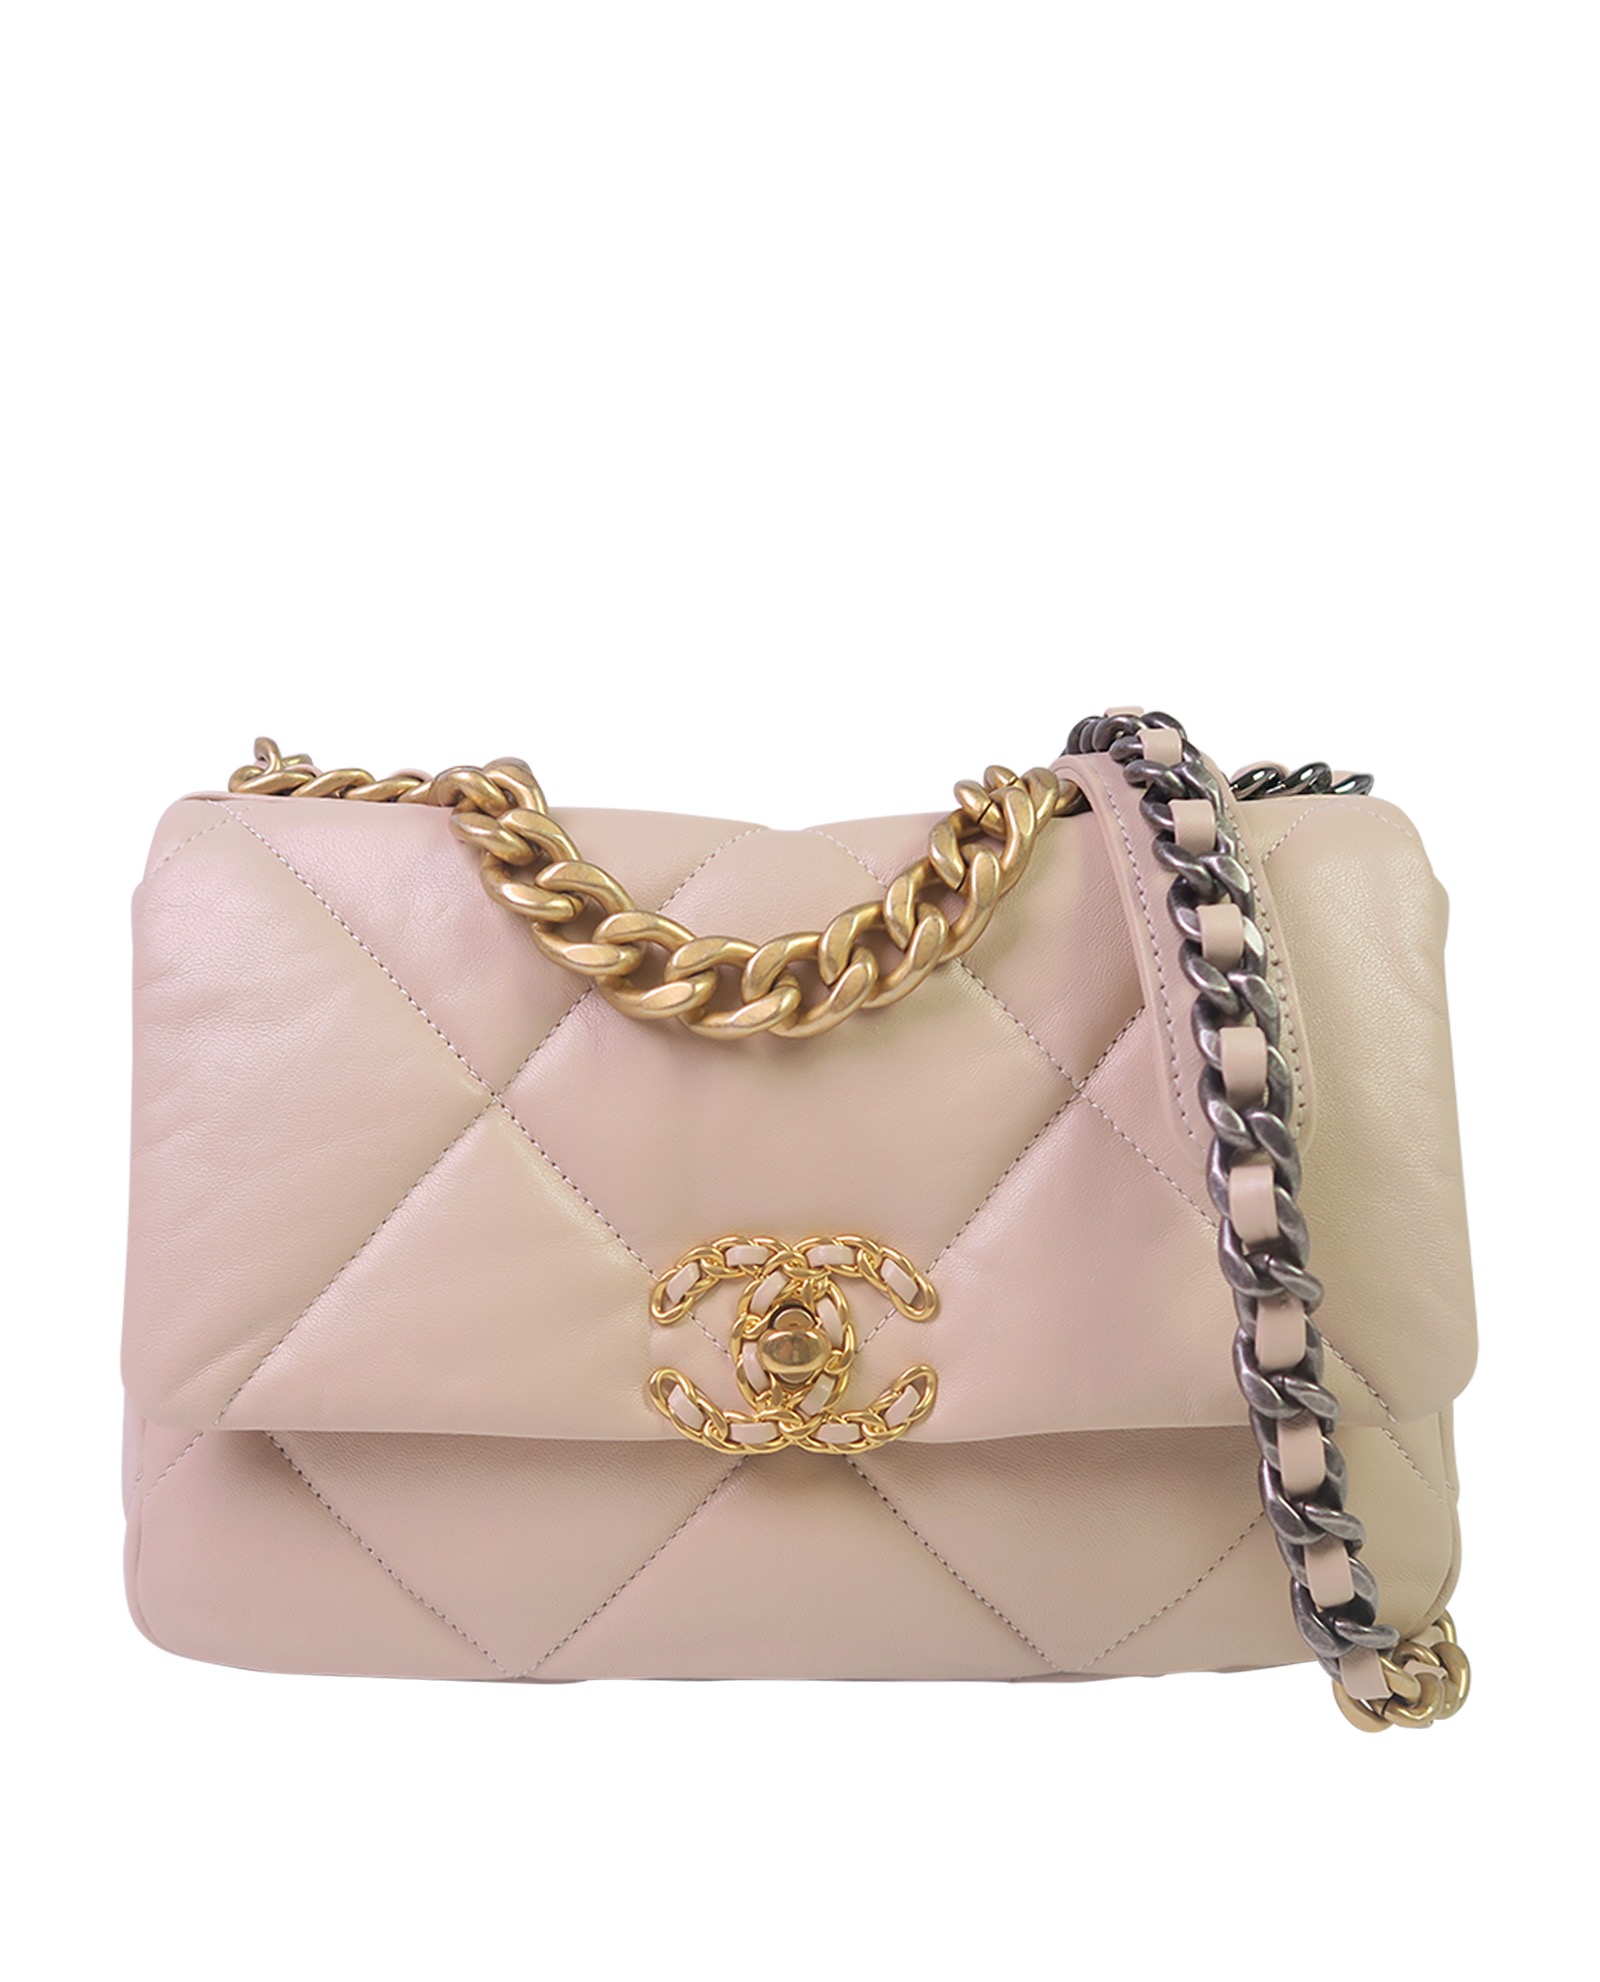 Handbag Review: Medium Chanel 19 The Teacher Diva: A Dallas